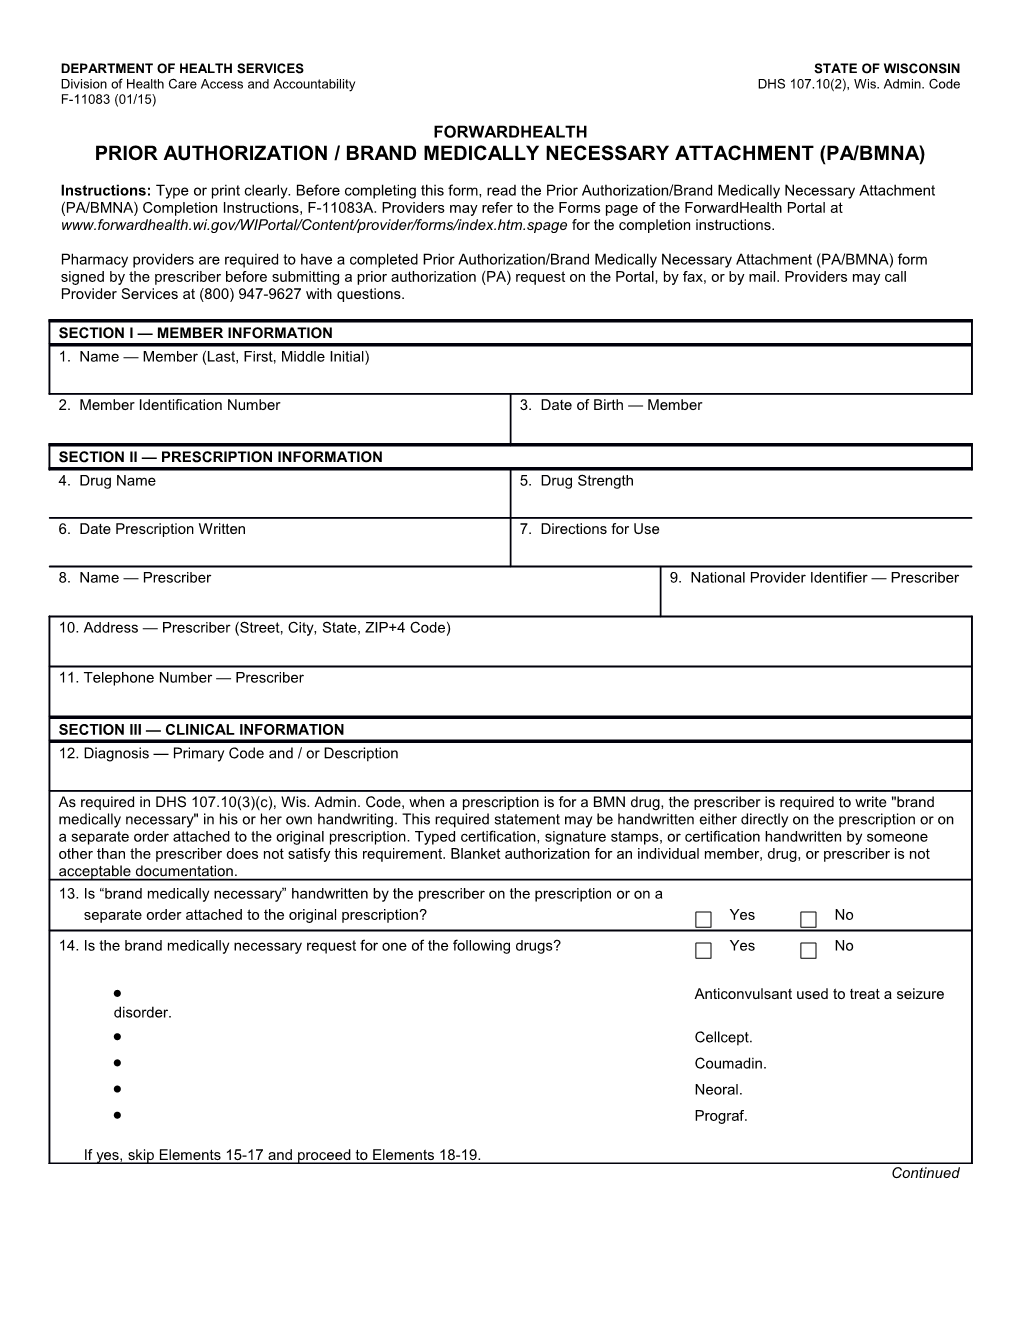 Prior Authorization / Brand Medically Necessary Attachment (Pa/Bmna), F-11083